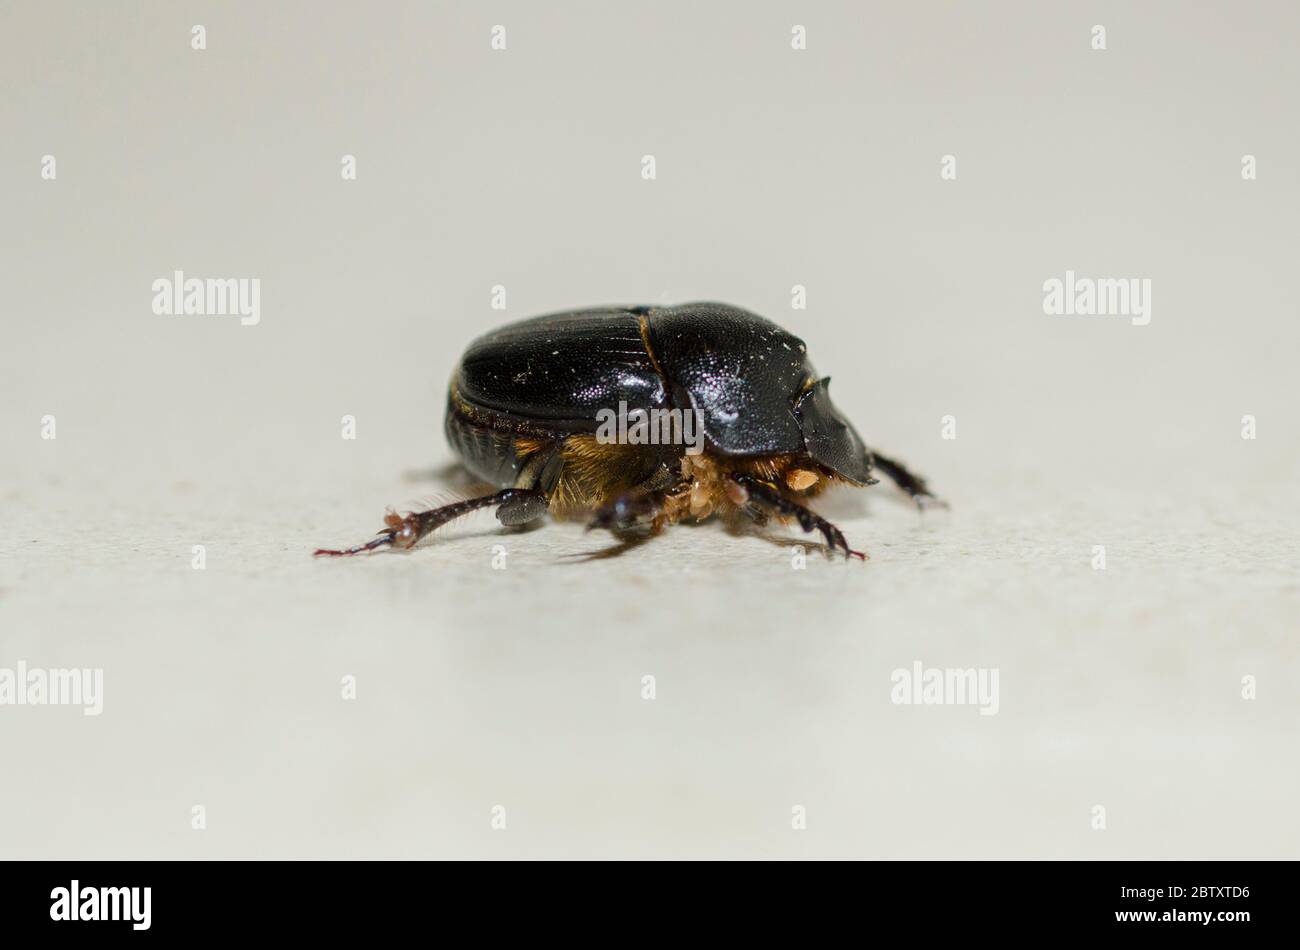 Dung Beetle, Famiglia Scarabaeidae, con acari coreici, classe Arachnidai, Klungkung, Bali, Indonesia Foto Stock